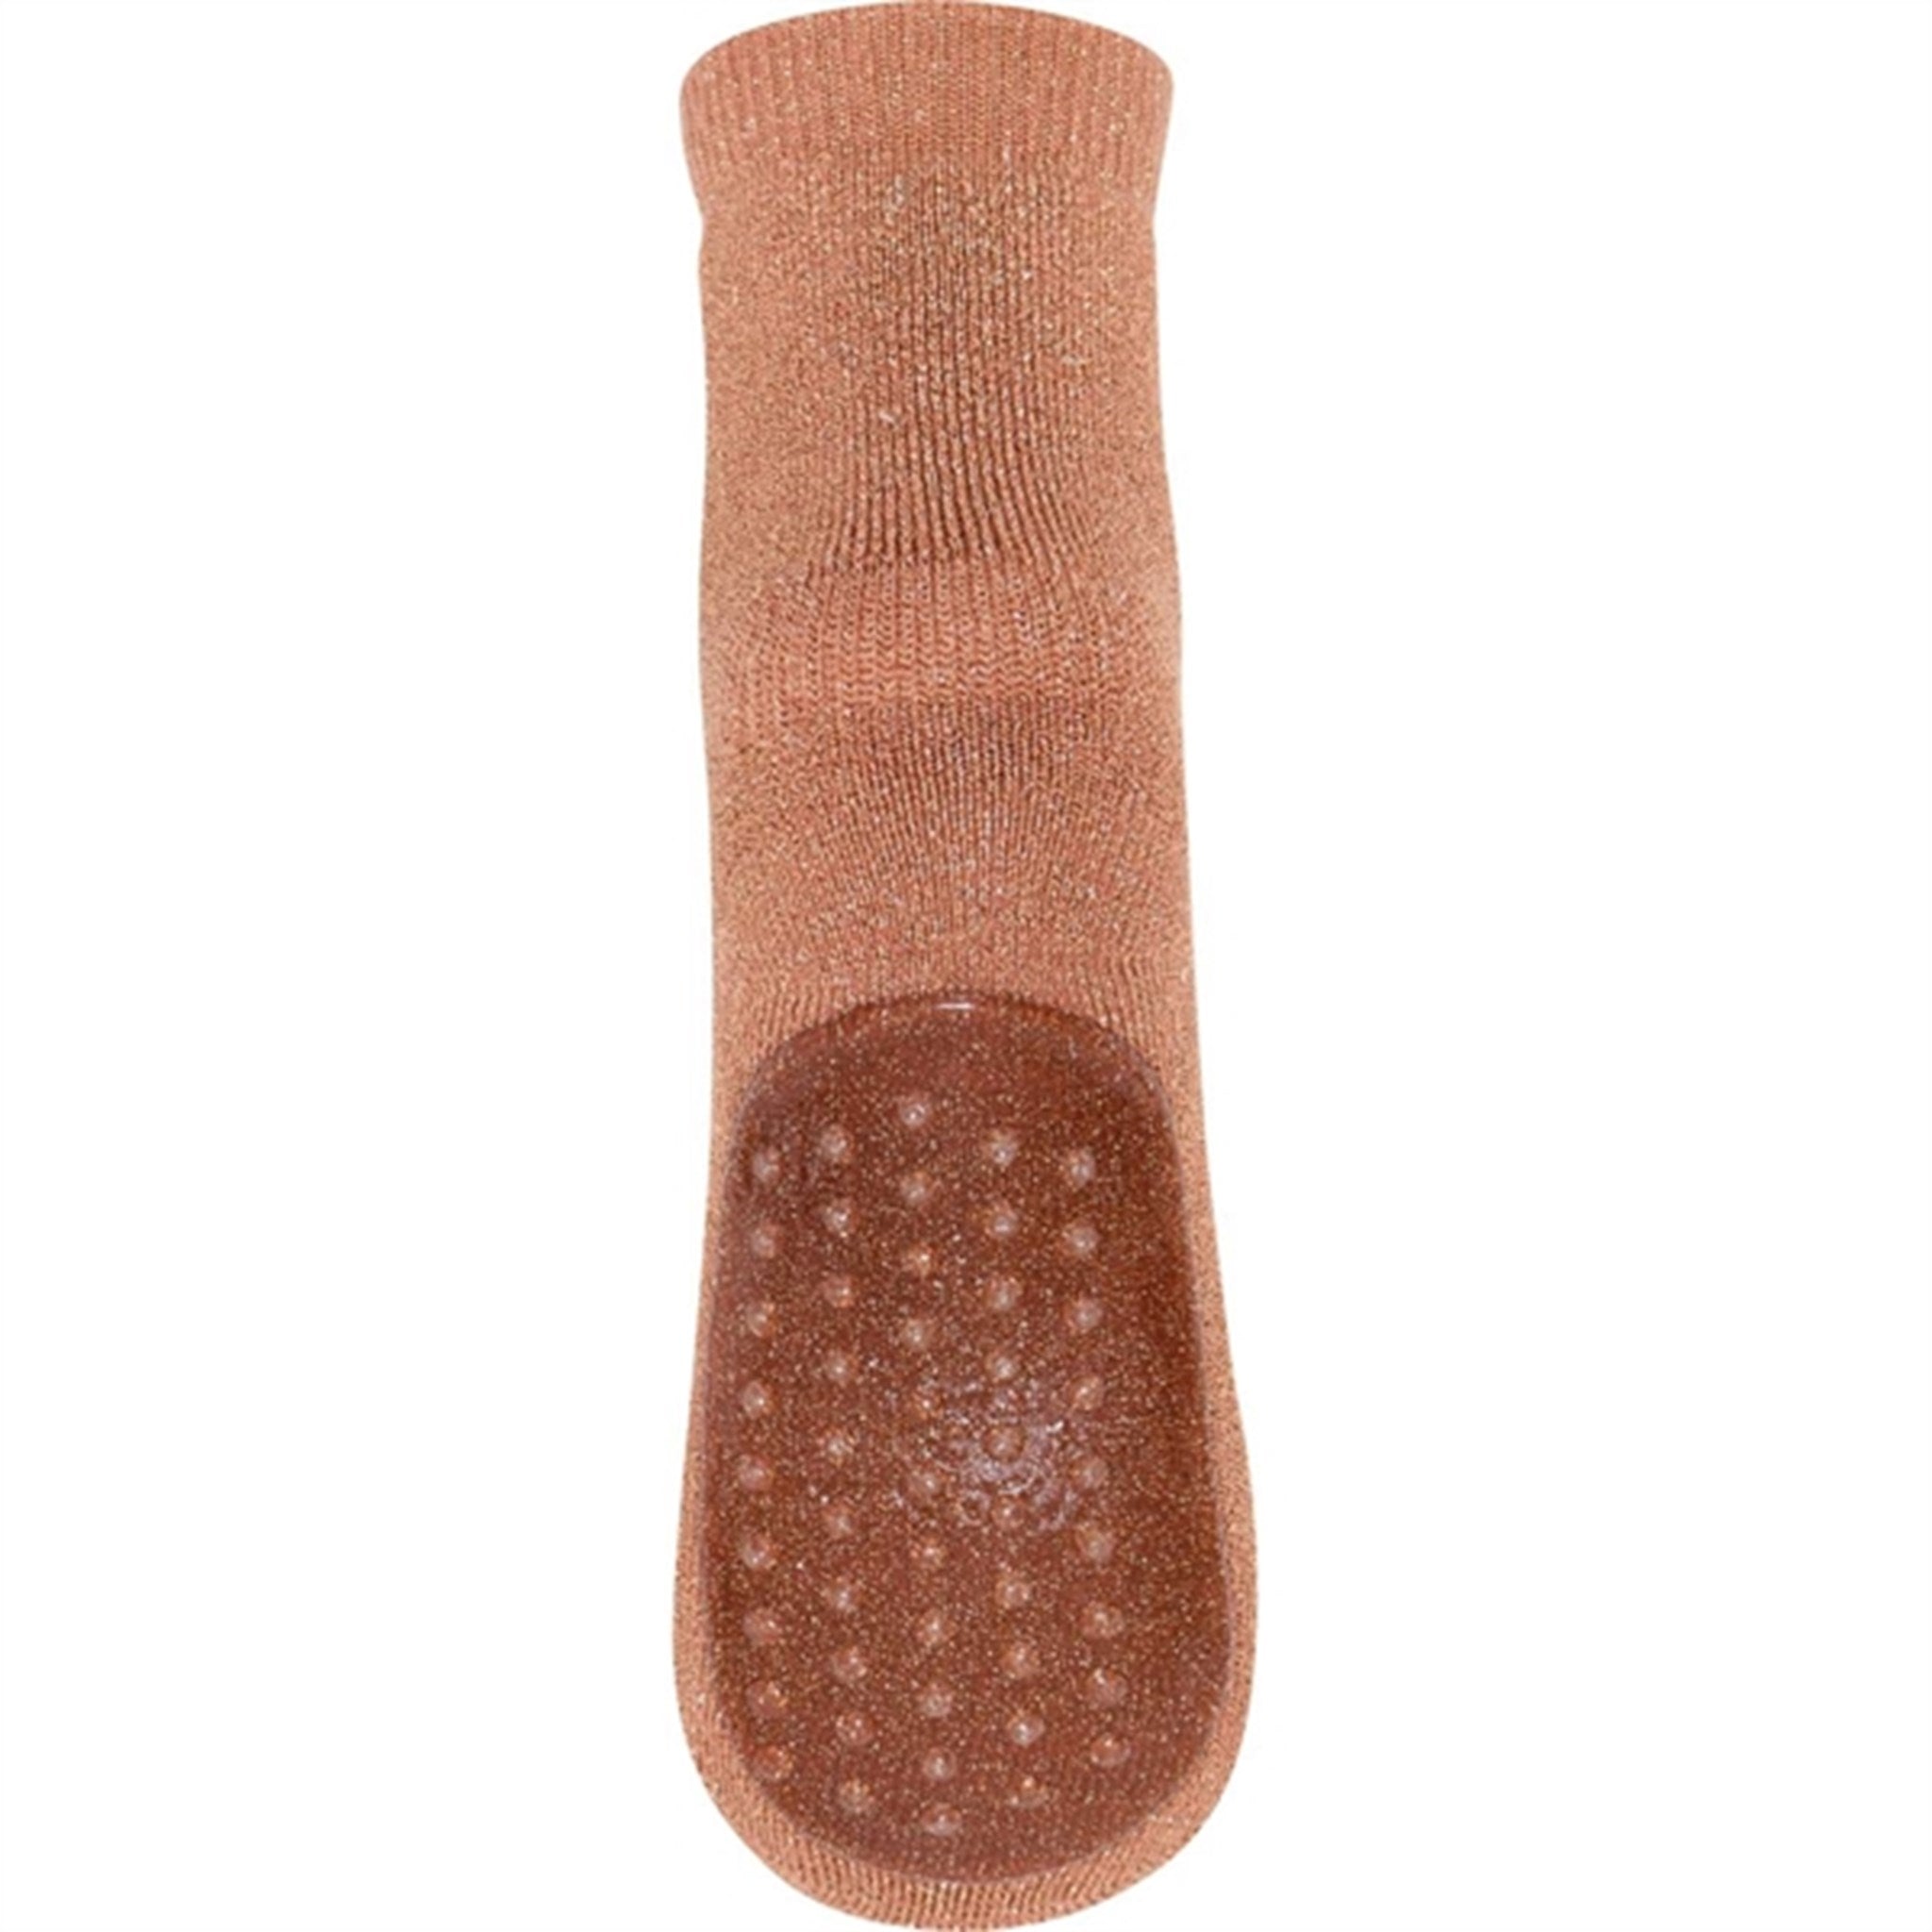 MP 79208 Celina Socks With Anti-Slip 2315 Metallic Glitter Copper Brown 3